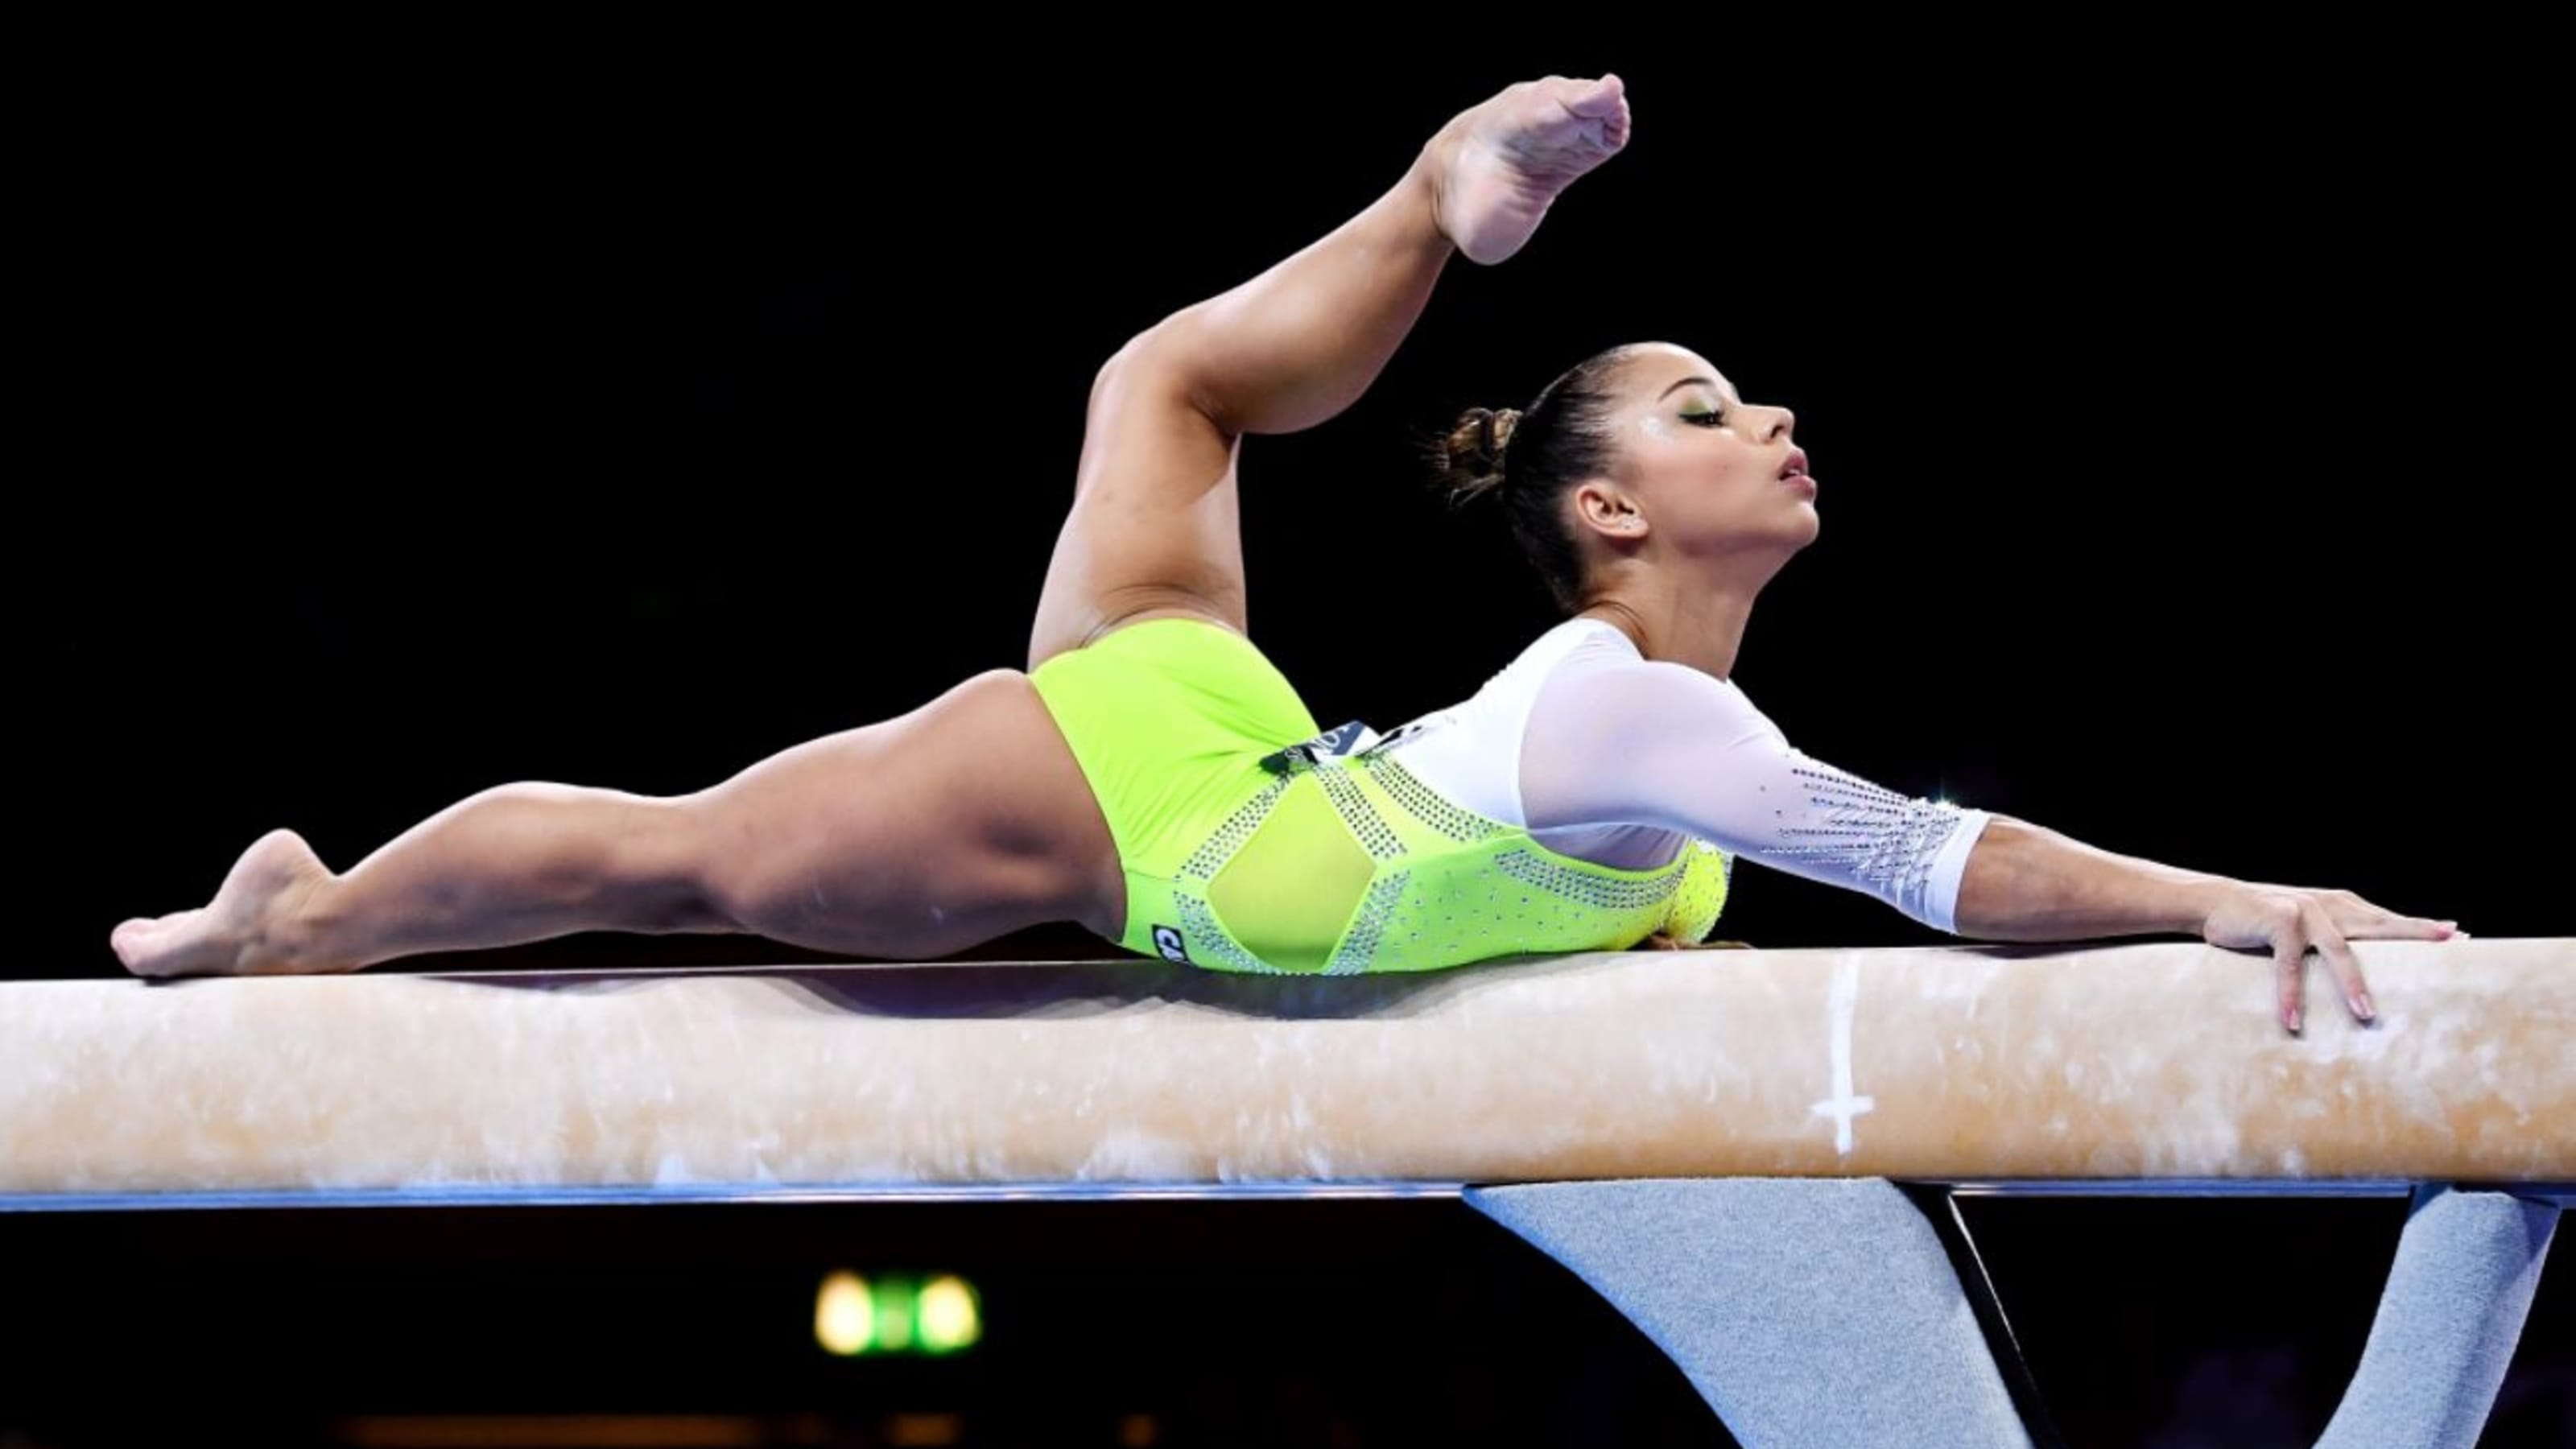 Gymnast Flavia Saraiva says past setbacks guide Tokyo 2020 dreams